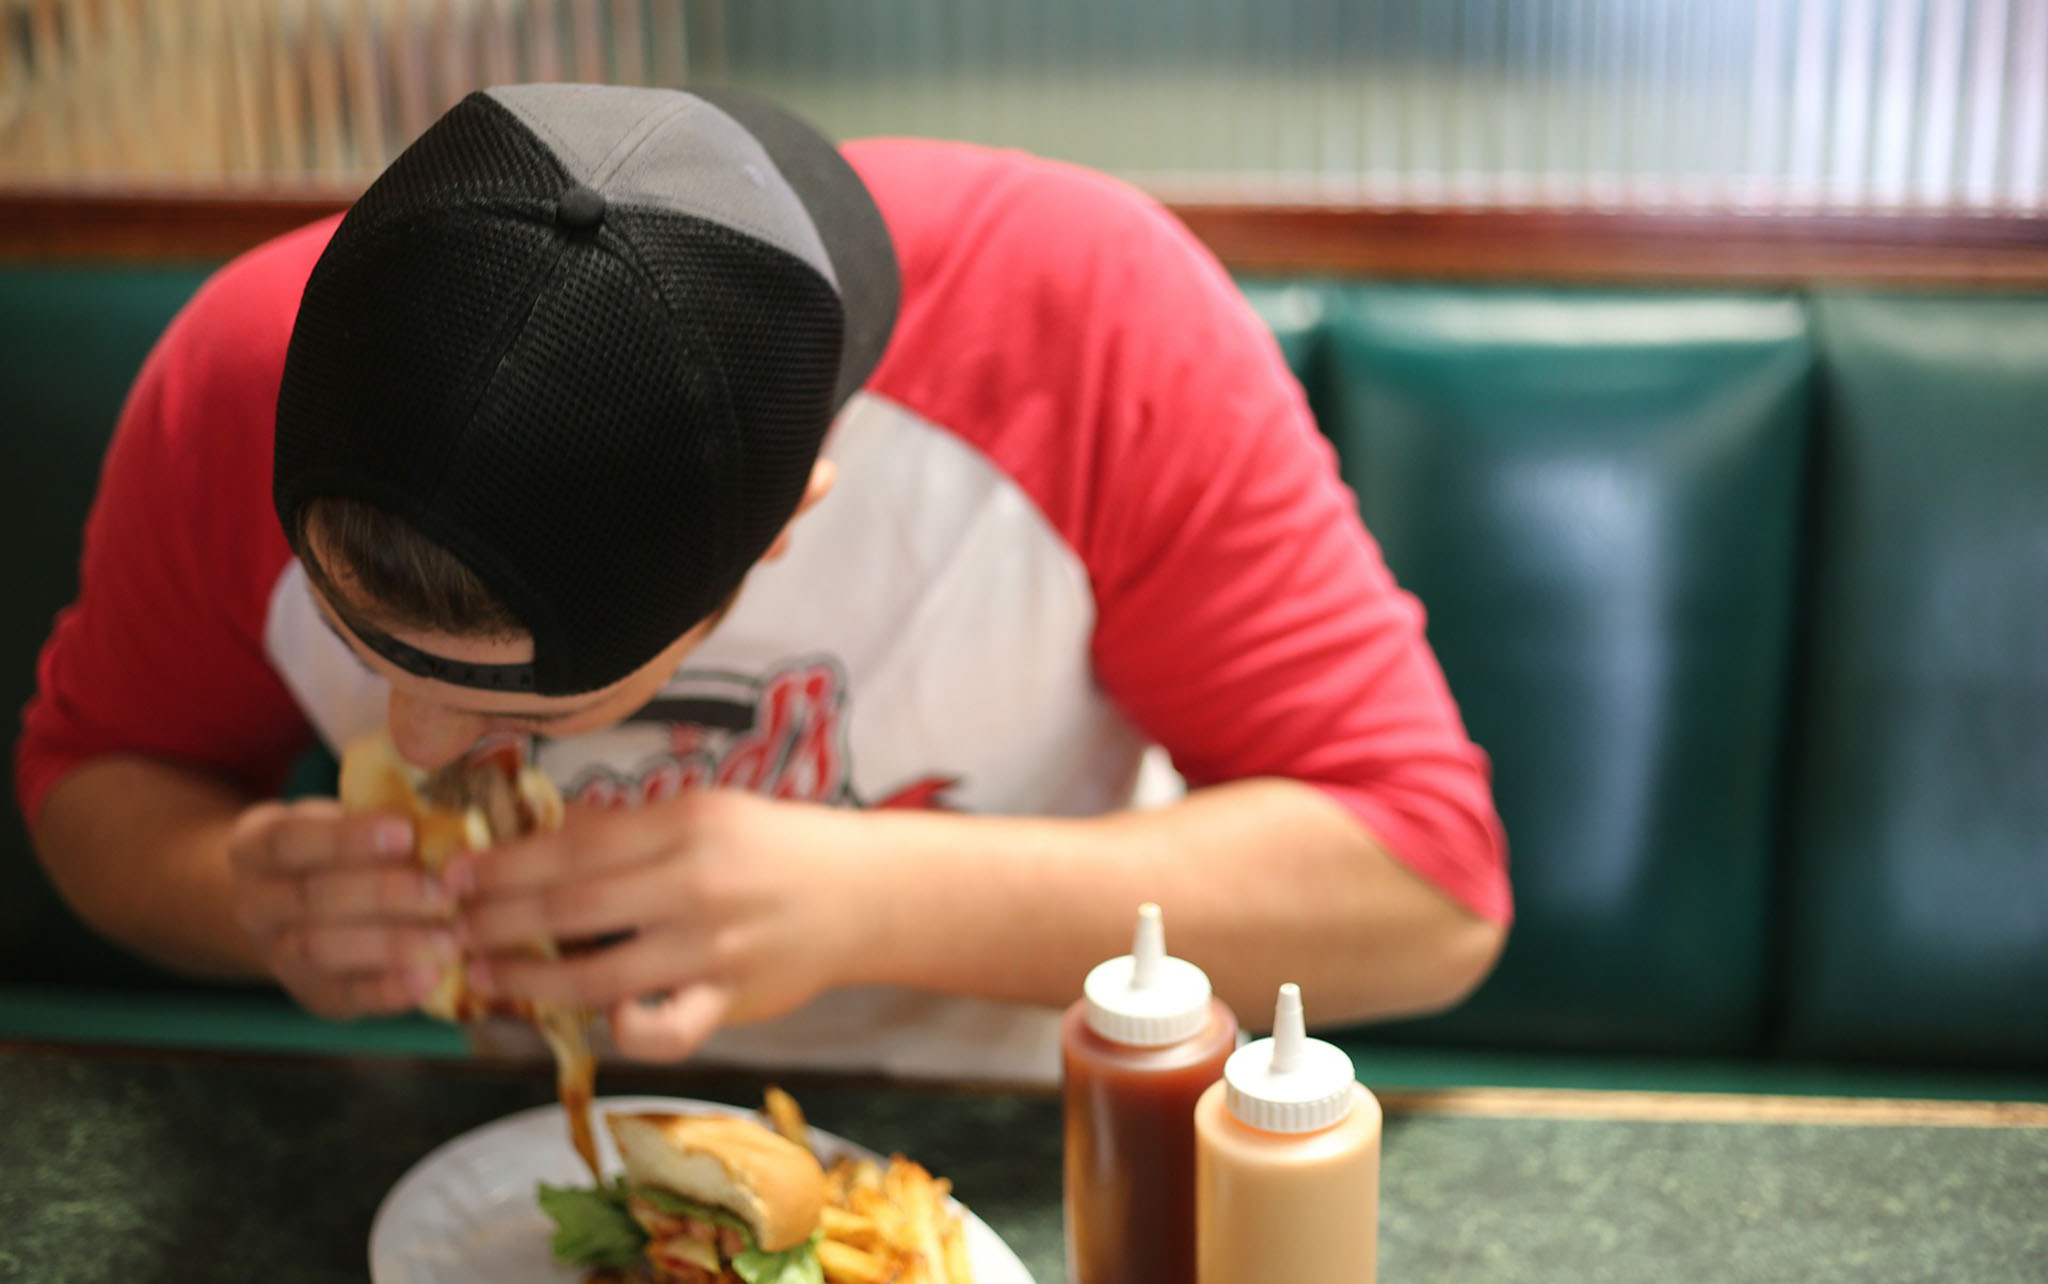 Man eating a hamburger in a fast food restaurant